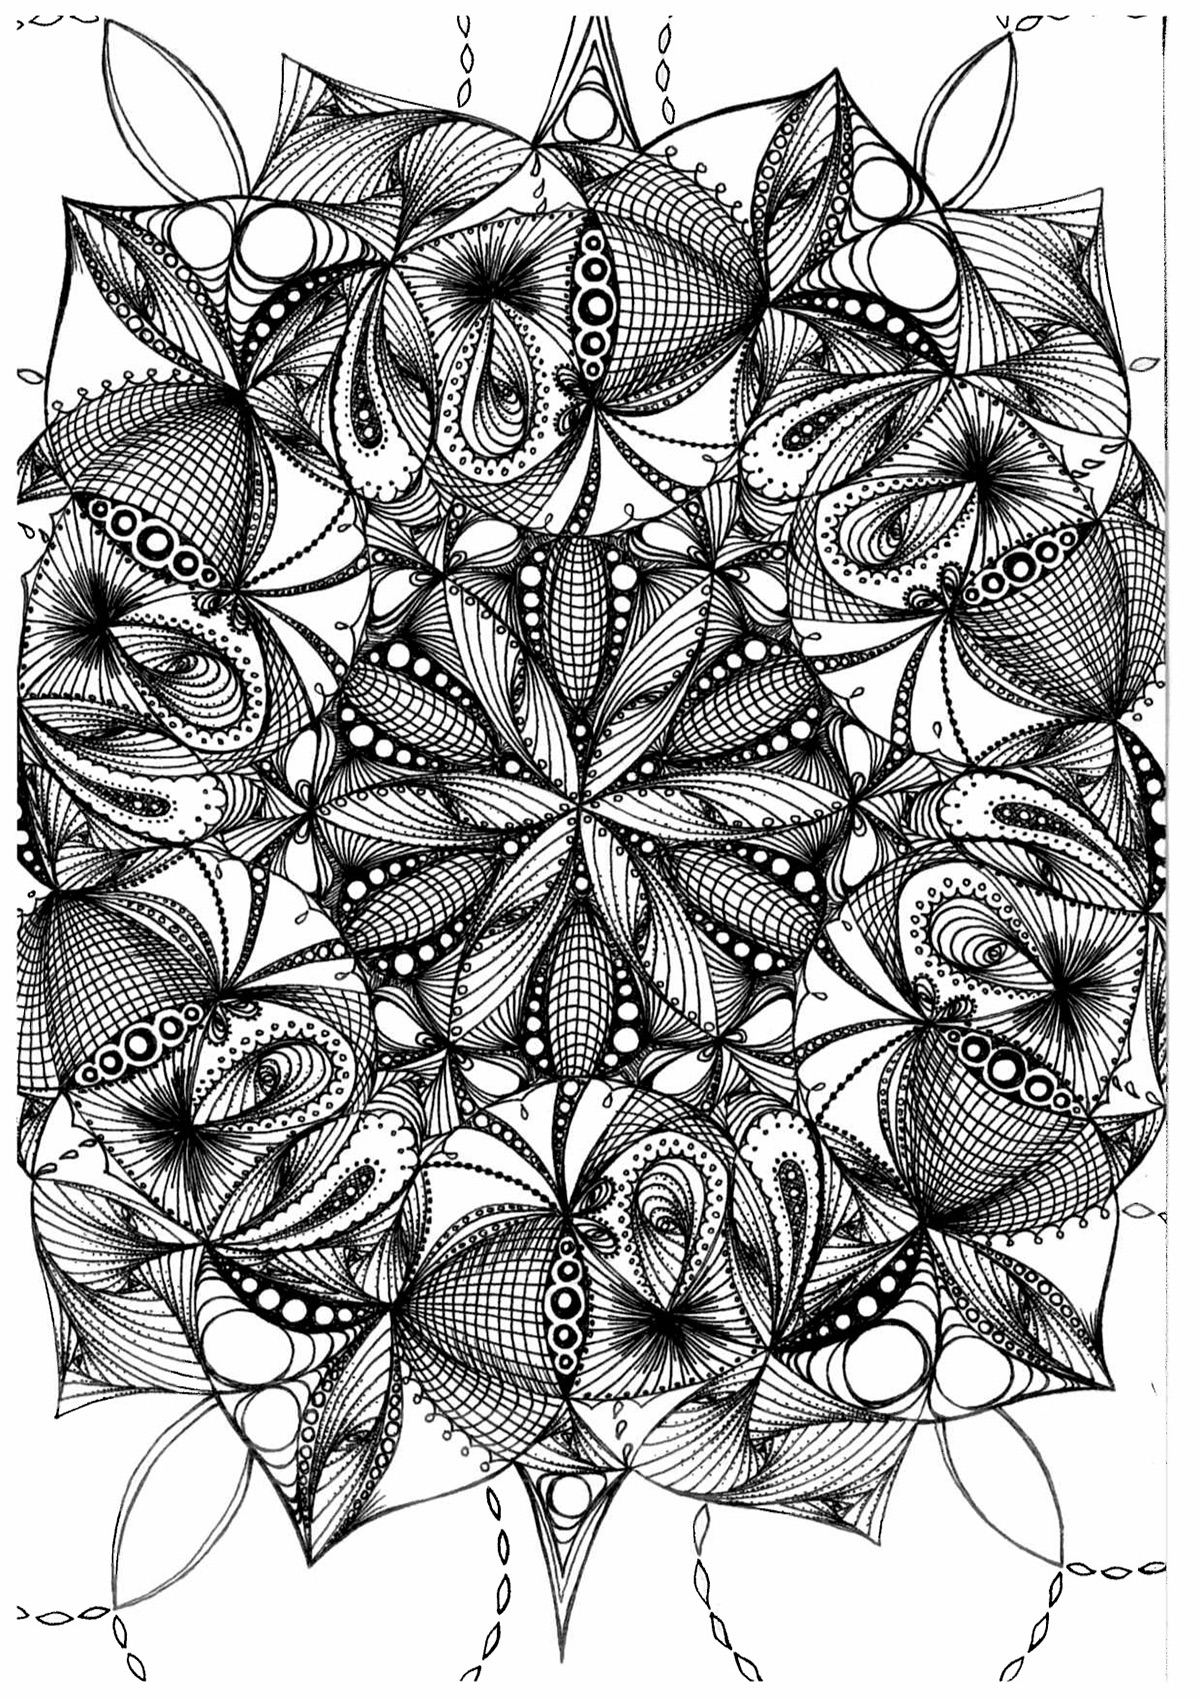 узор Цветок Жизни сакральная геометрия цветы мандала графика Mandala flowerofLife fractal sakralgeometry ornaments орнаменты